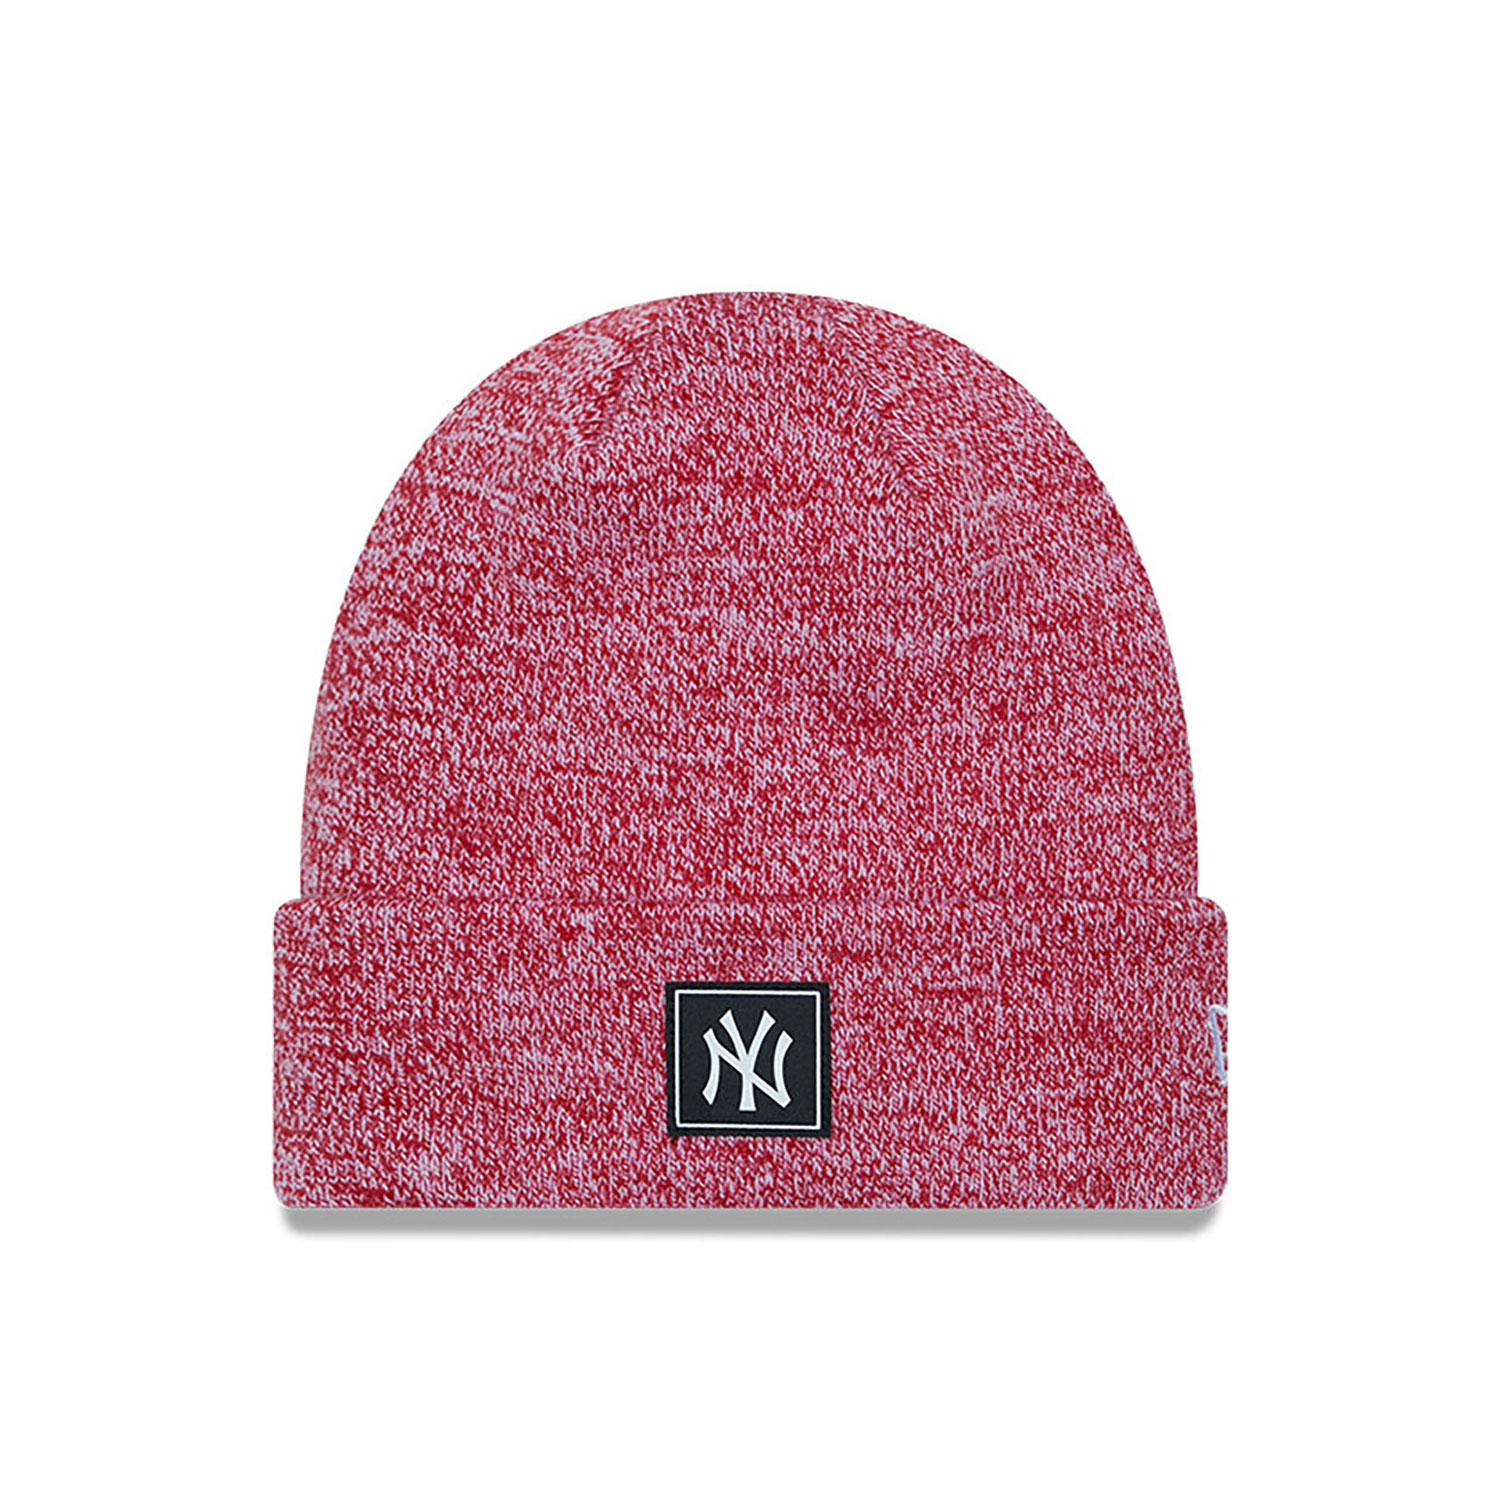 New York Yankees Team Red Cuff Knit Beanie Hat